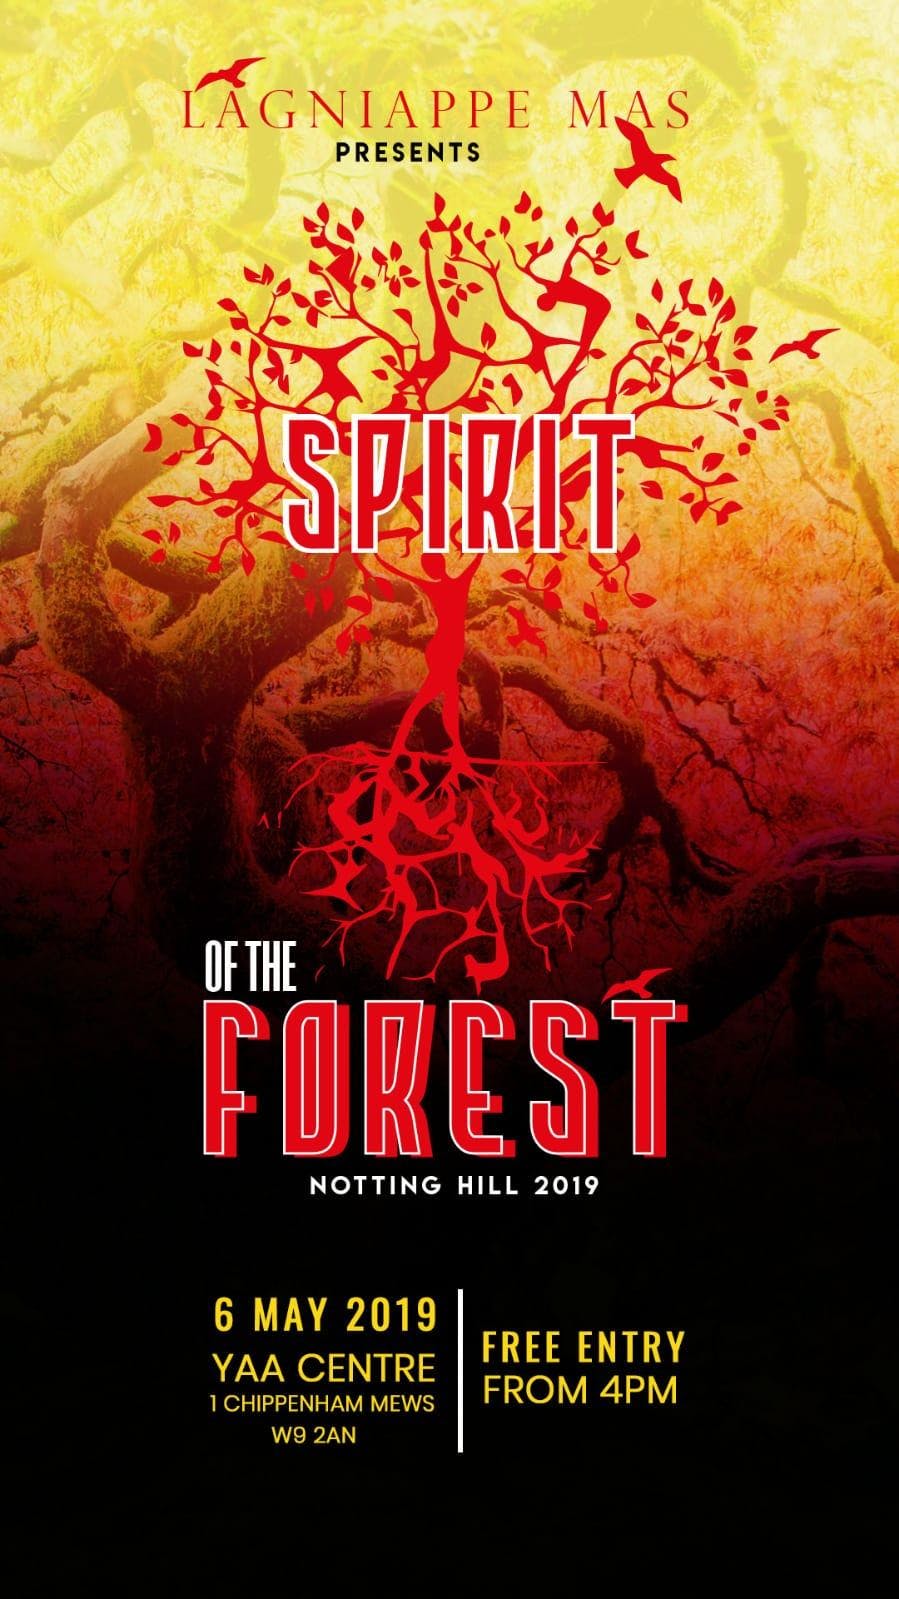 LAGNIAPPE MAS NHC 2019 ‘Spirit of the Forest’